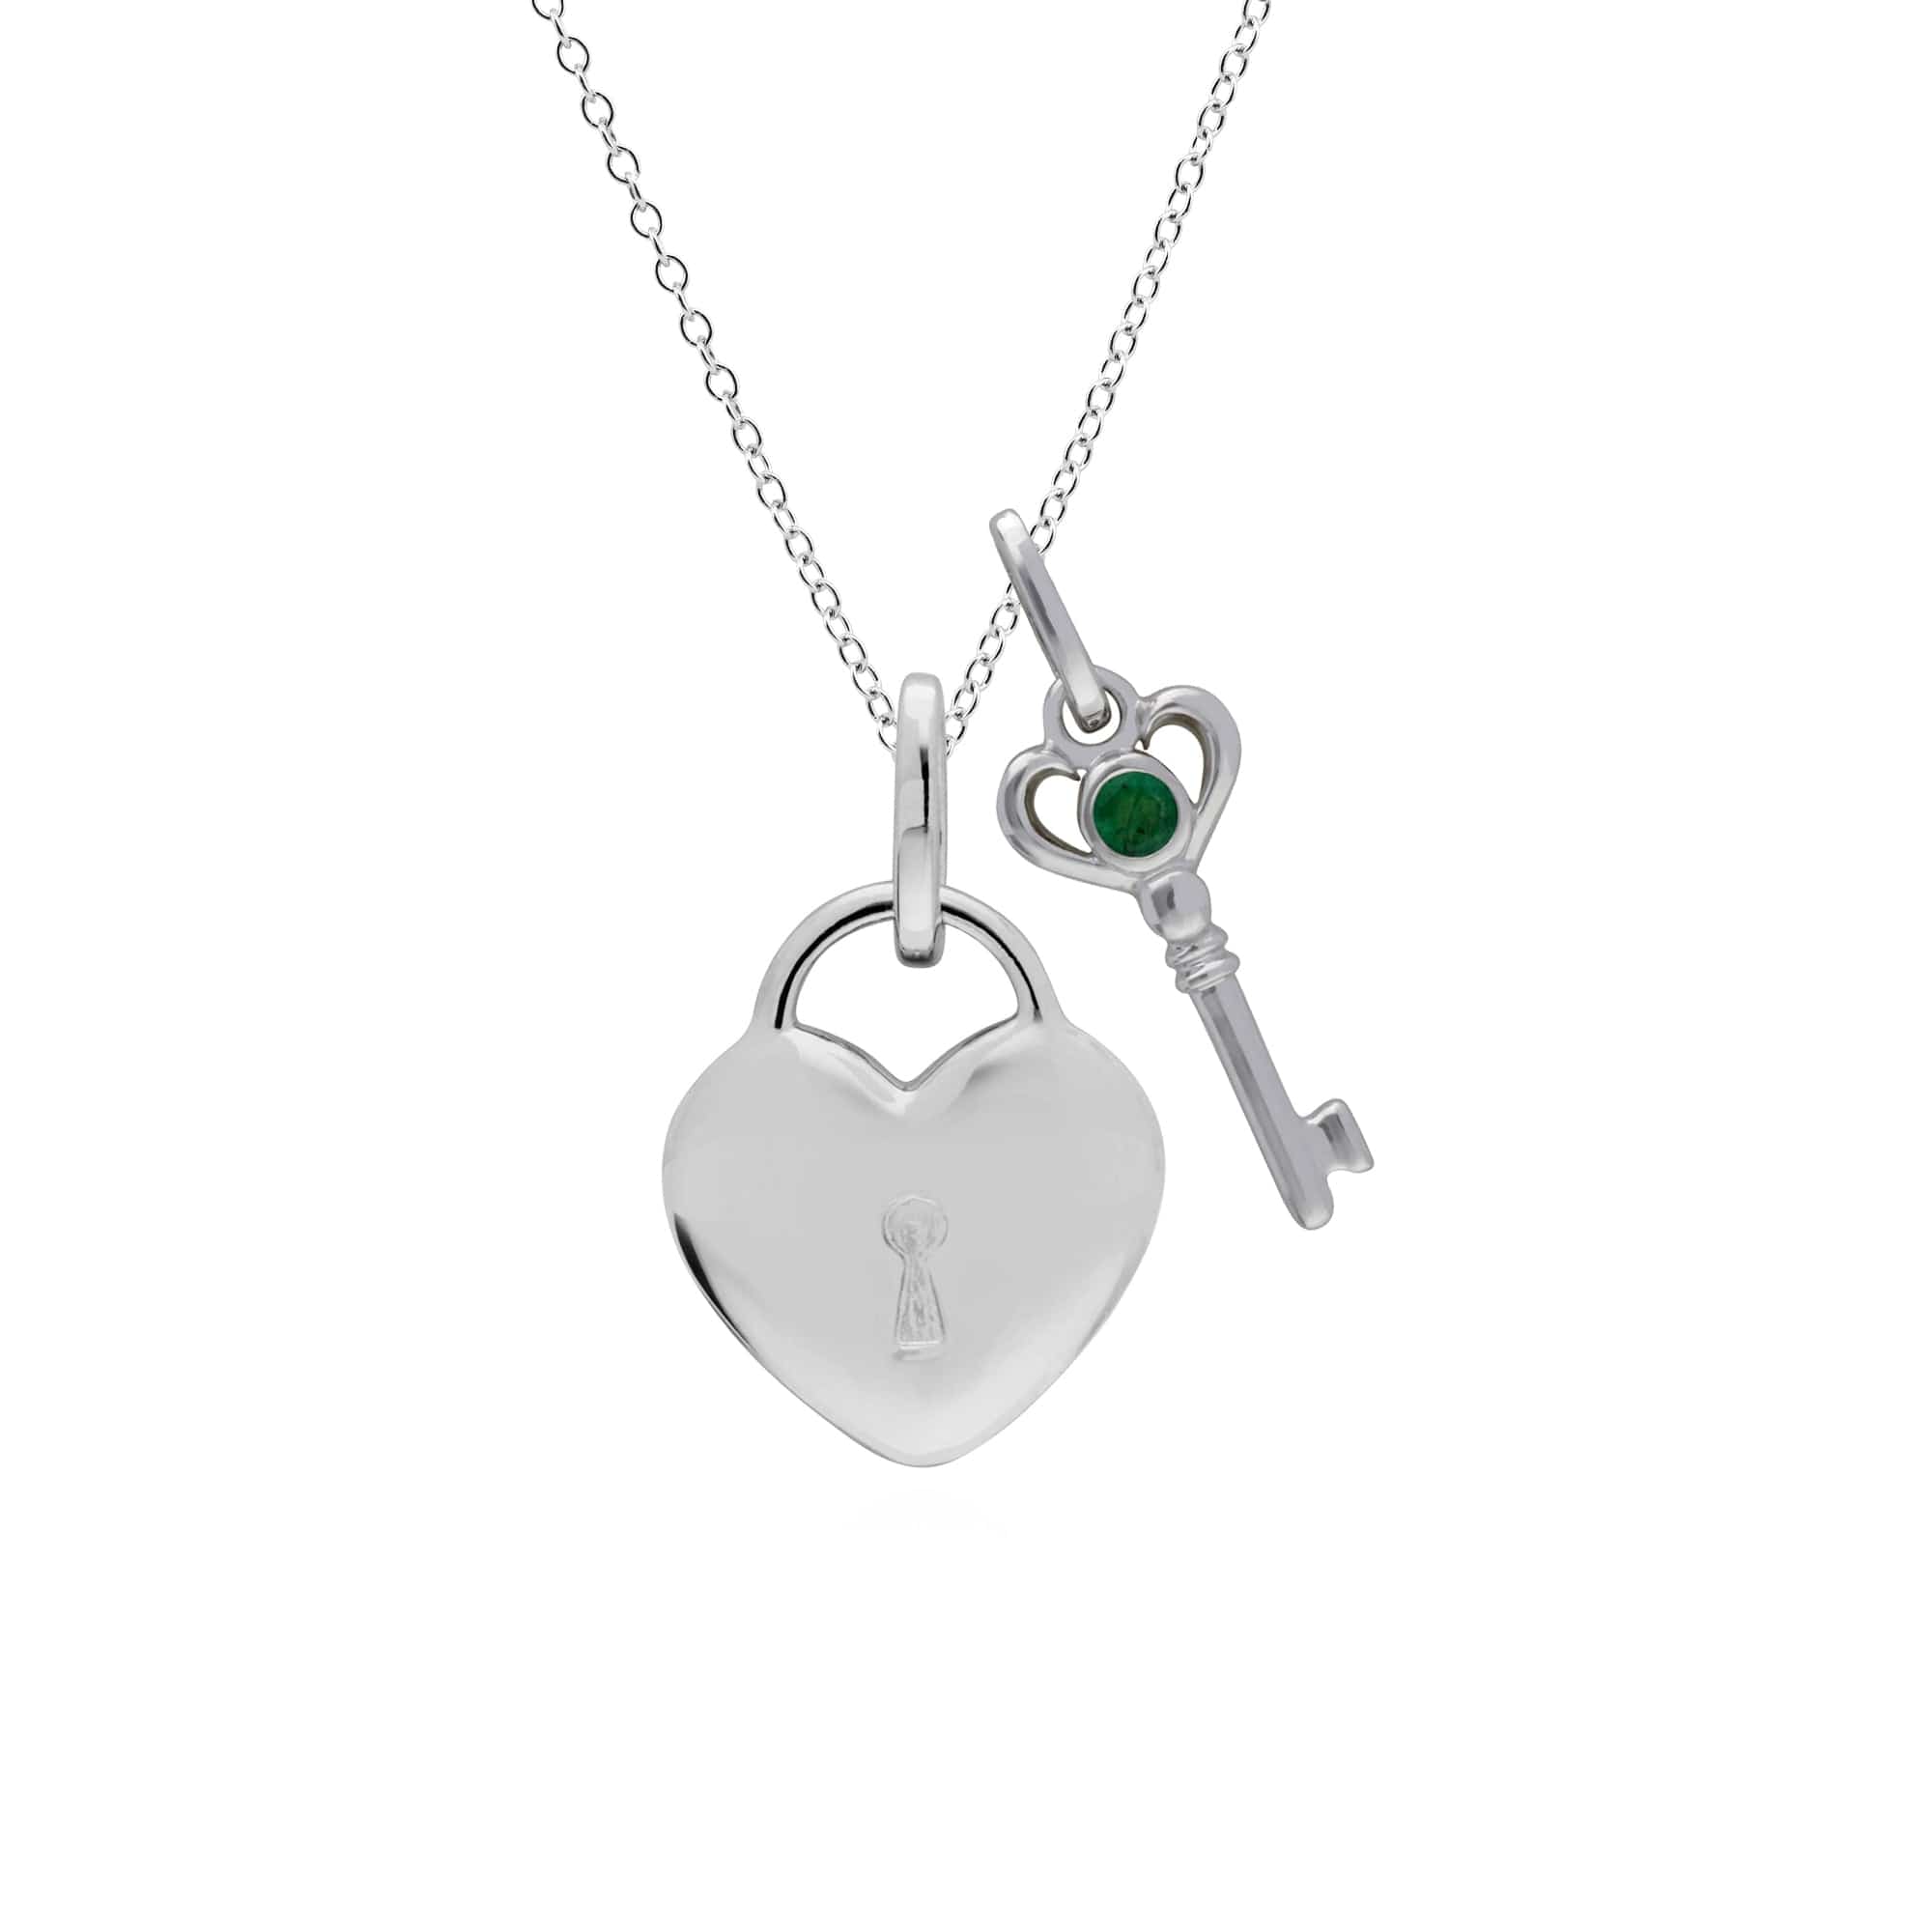 270P026401925-270P027001925 Classic Heart Lock Pendant & Emerald Key Charm in 925 Sterling Silver 1